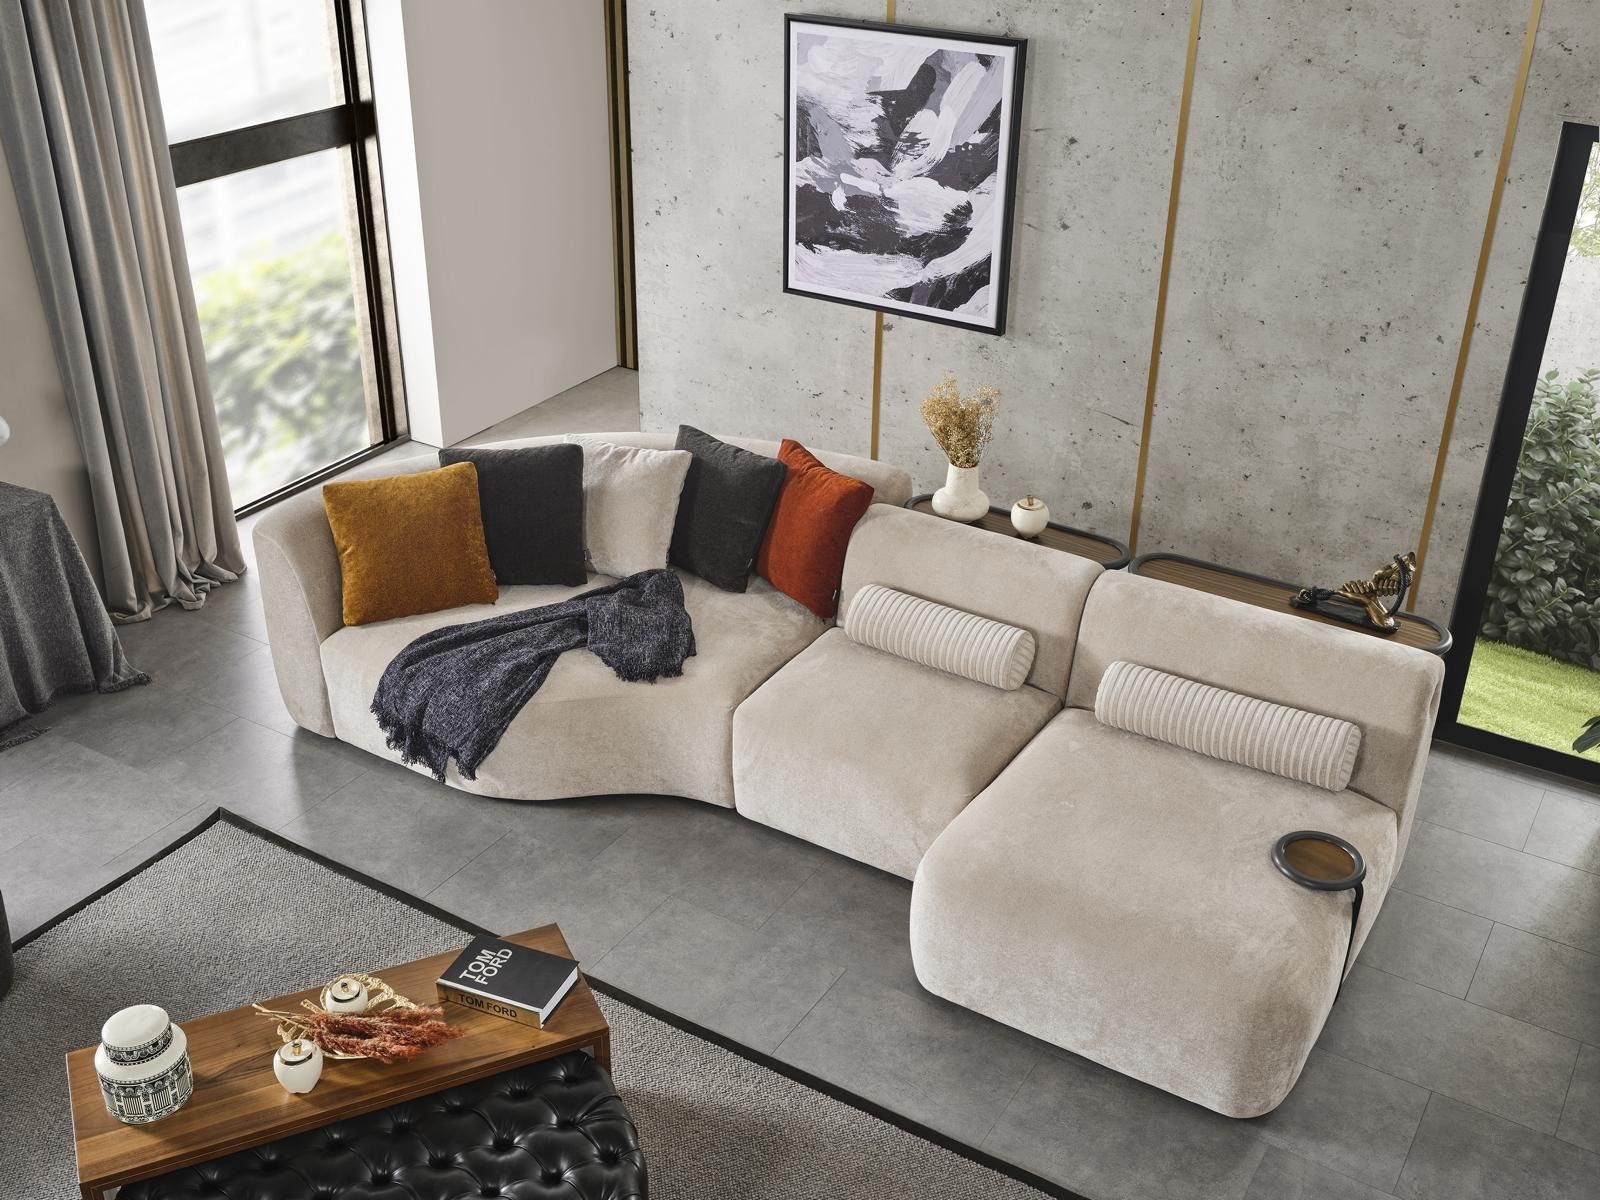 JVmoebel Ecksofa Ecksofa L Form Design Couch Holz mit Textil Polster neu Möbel weiß